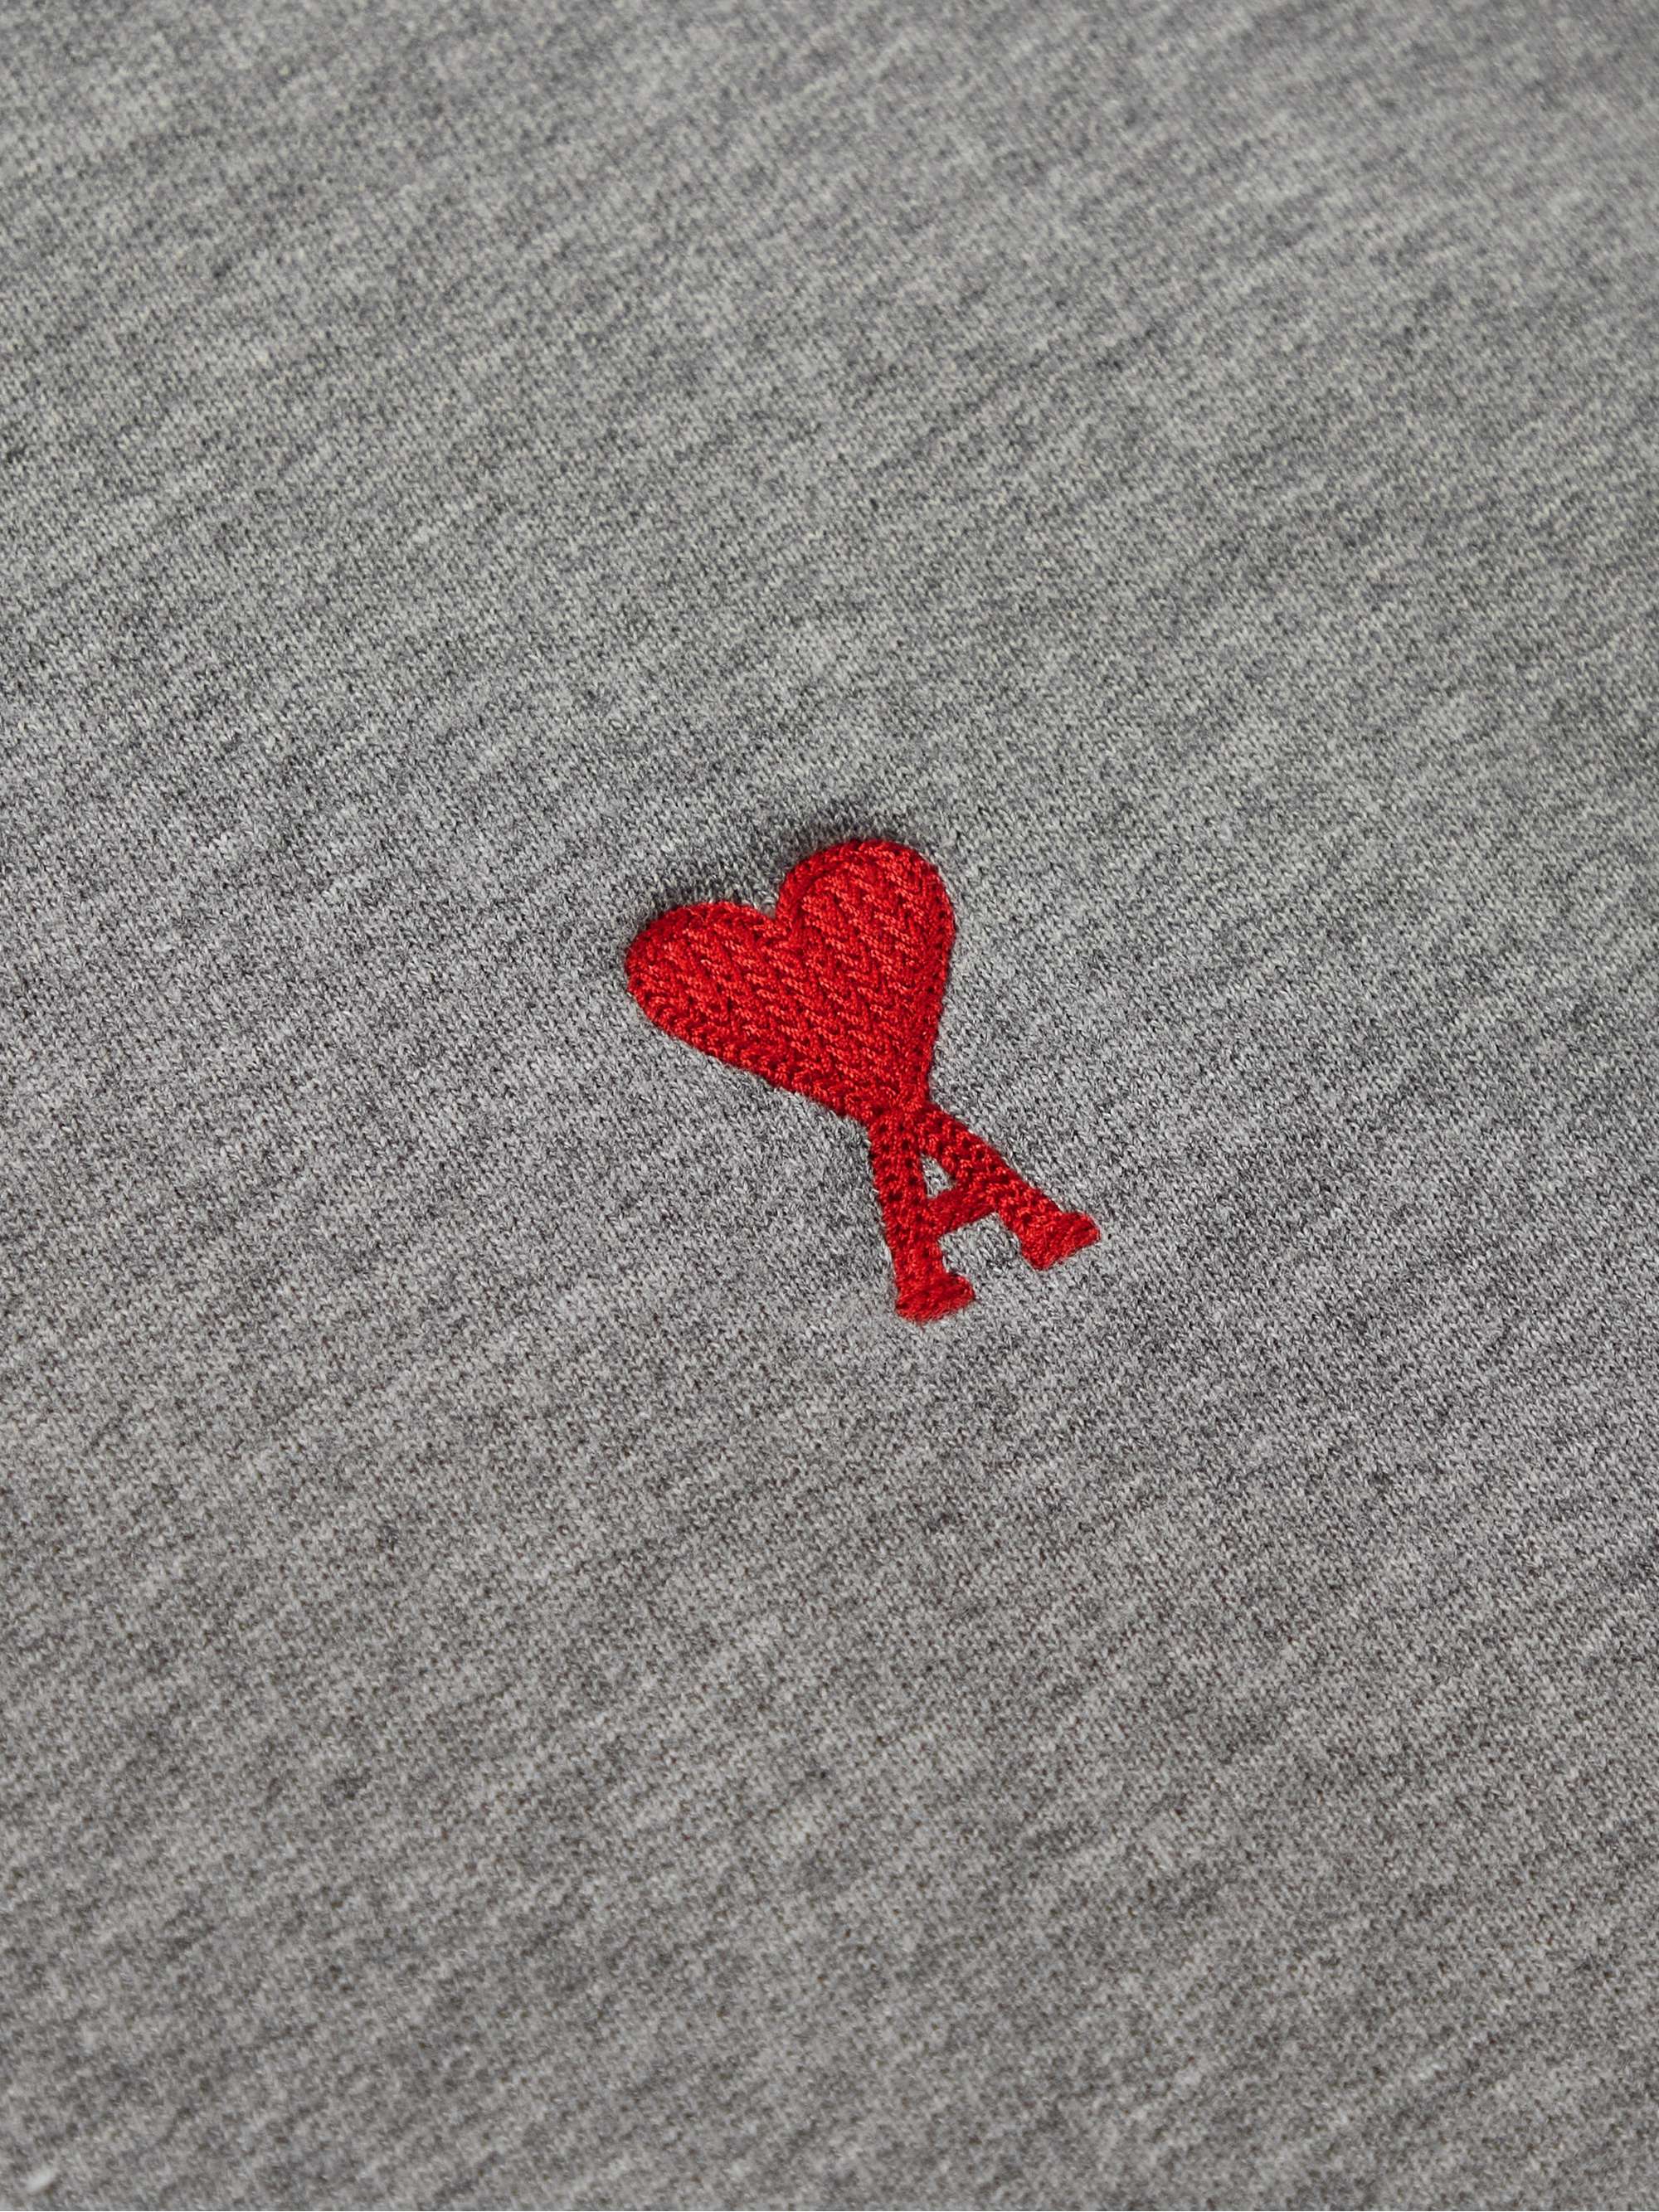 AMI PARIS Logo-Embroidered Cotton-Jersey Sweatshirt